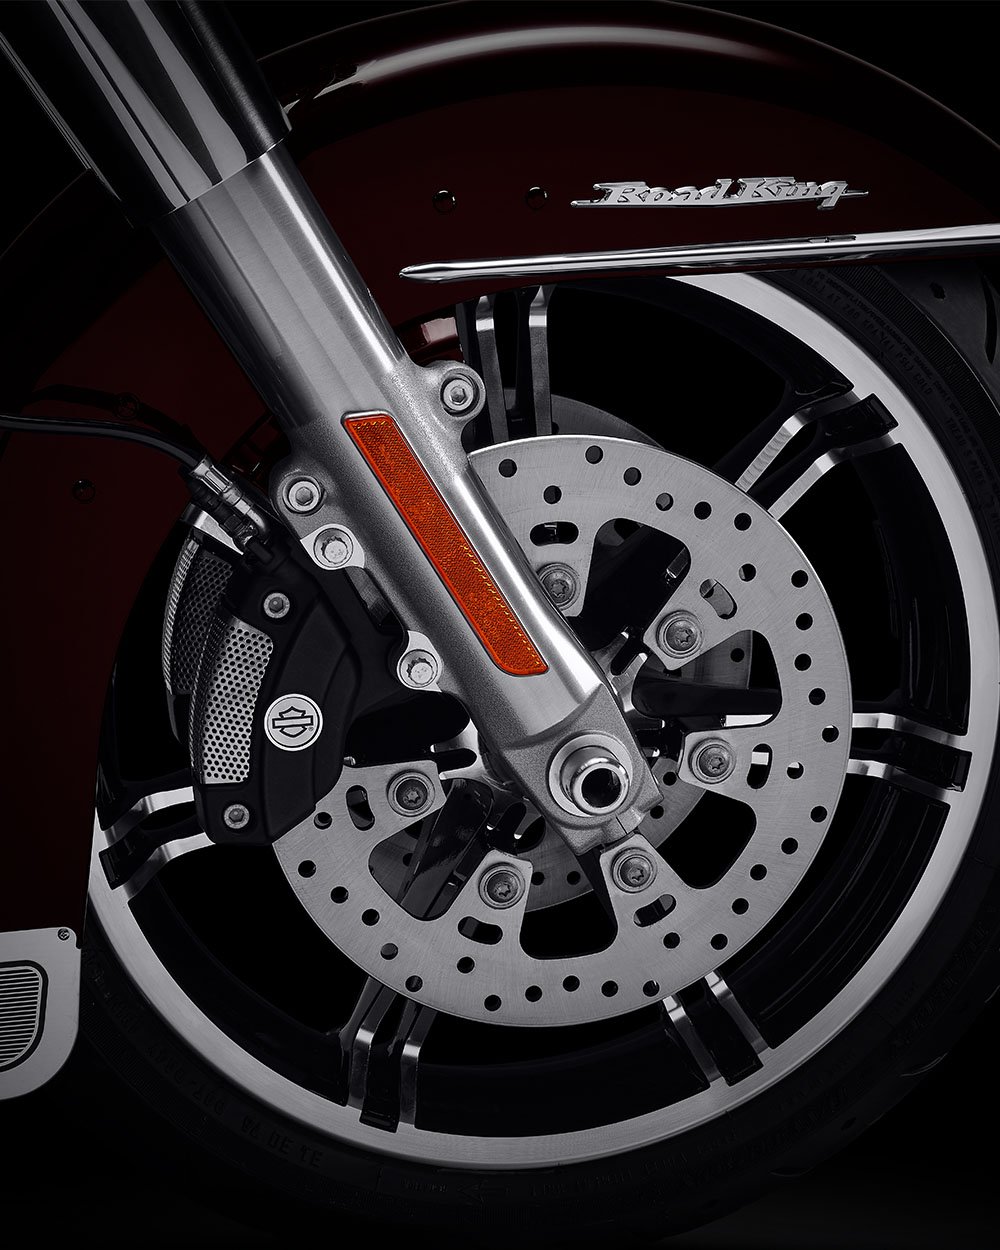 Travões Reflex Linked Brembo Brakes com ABS opcional numa moto Road King de 2022